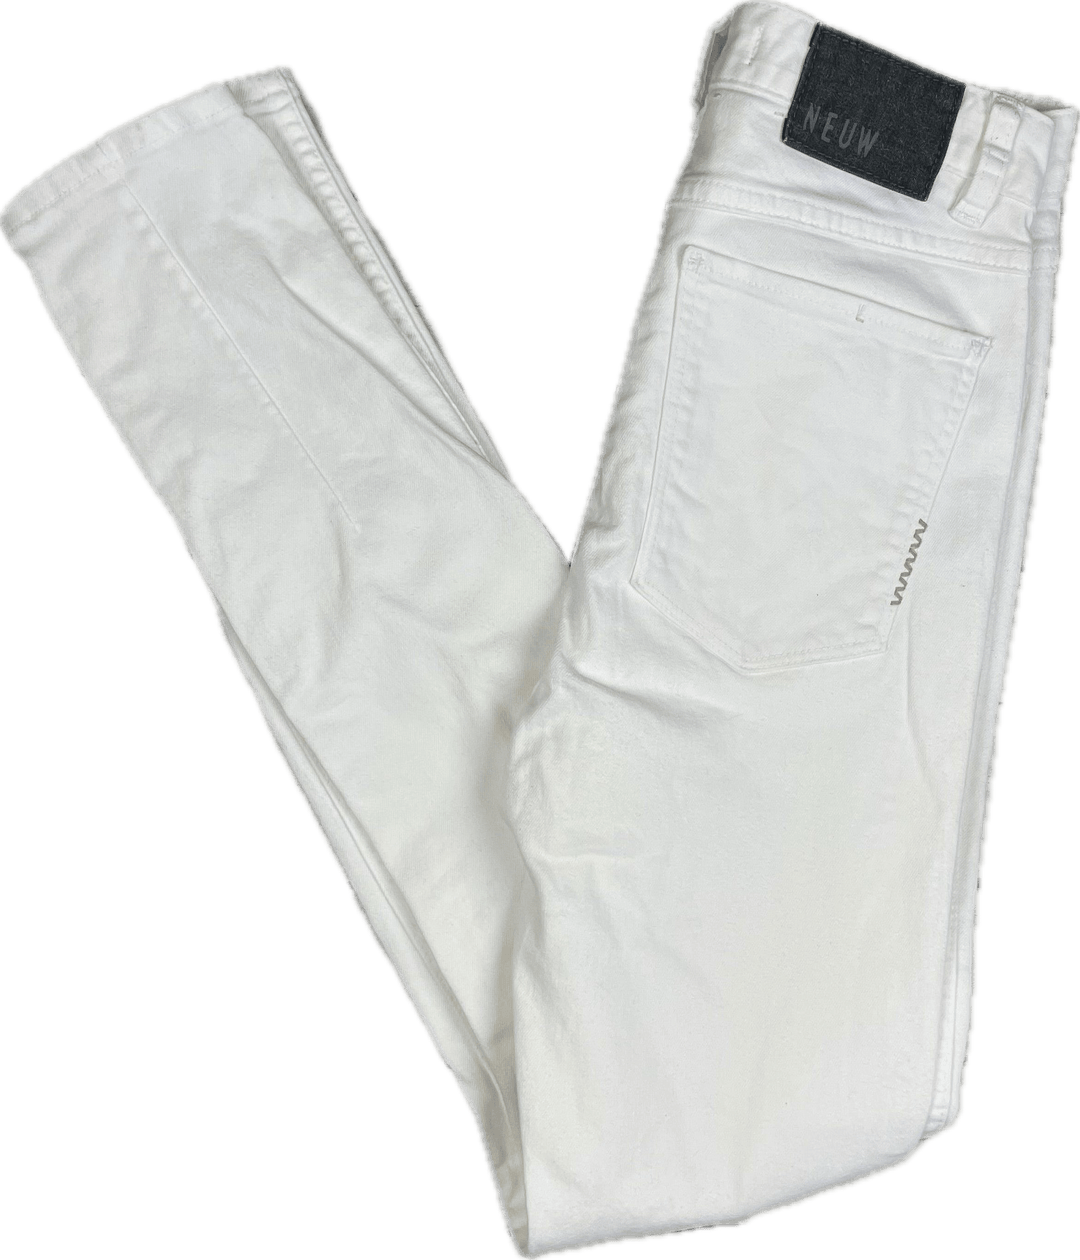 NEUW 'Marilyn' High Skinny White Stretch Jeans - Size 24 or 6 AU - Jean Pool